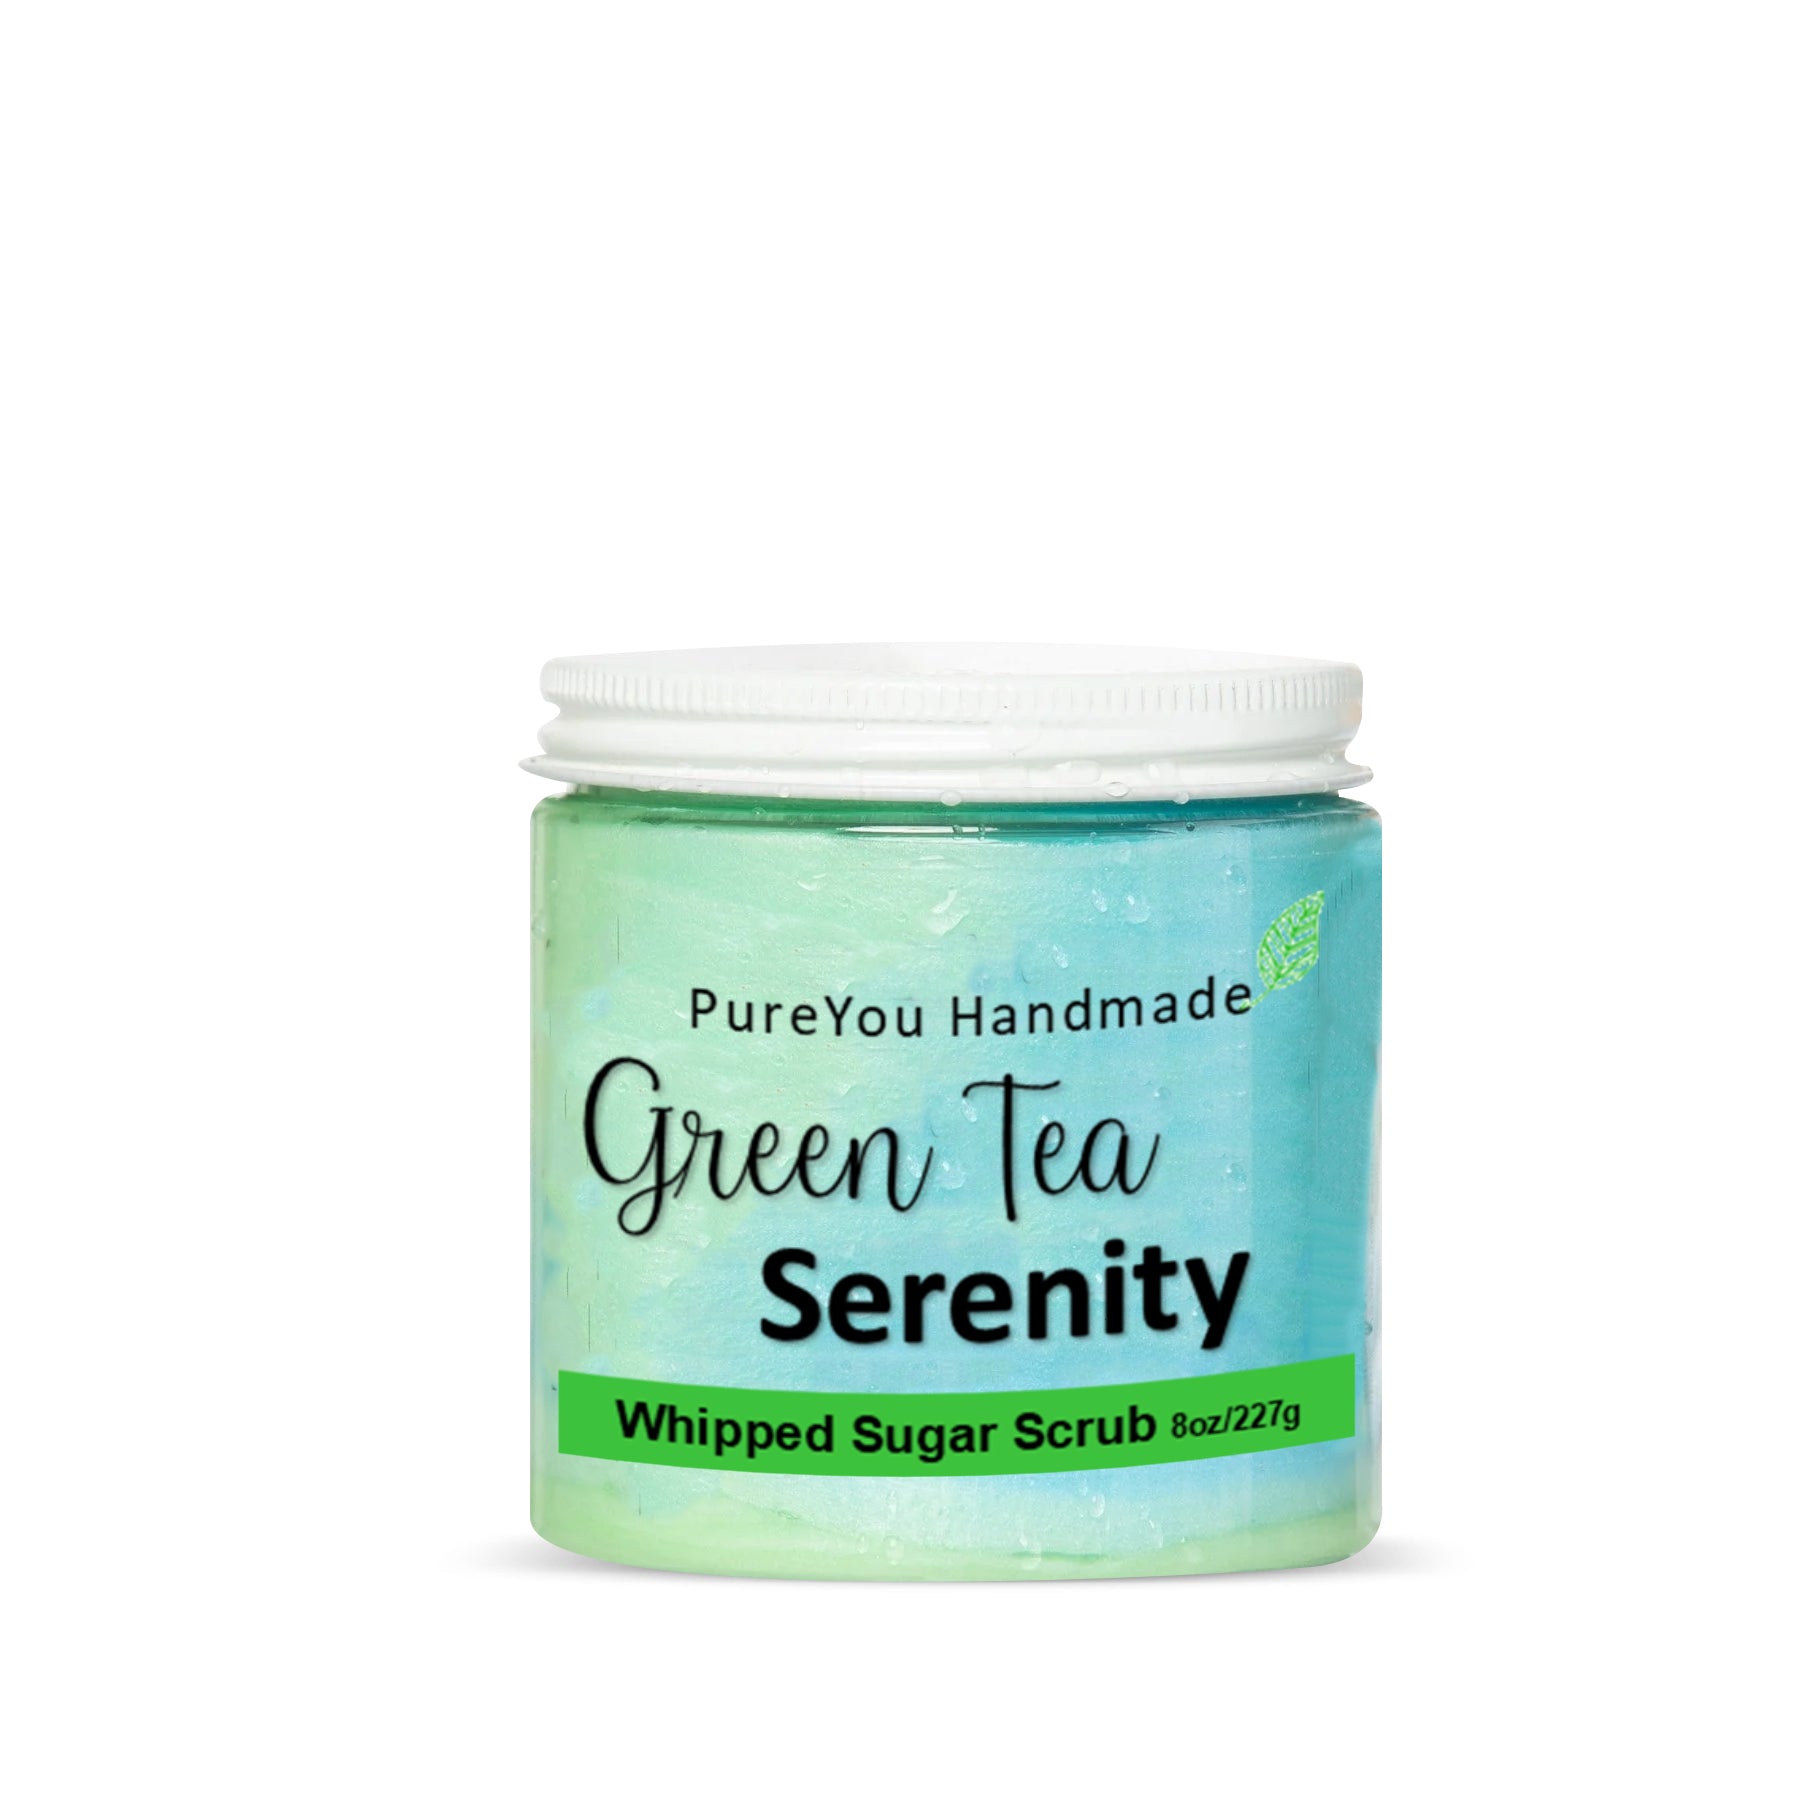 Green Tea Serenity Whipped Sugar Scrub